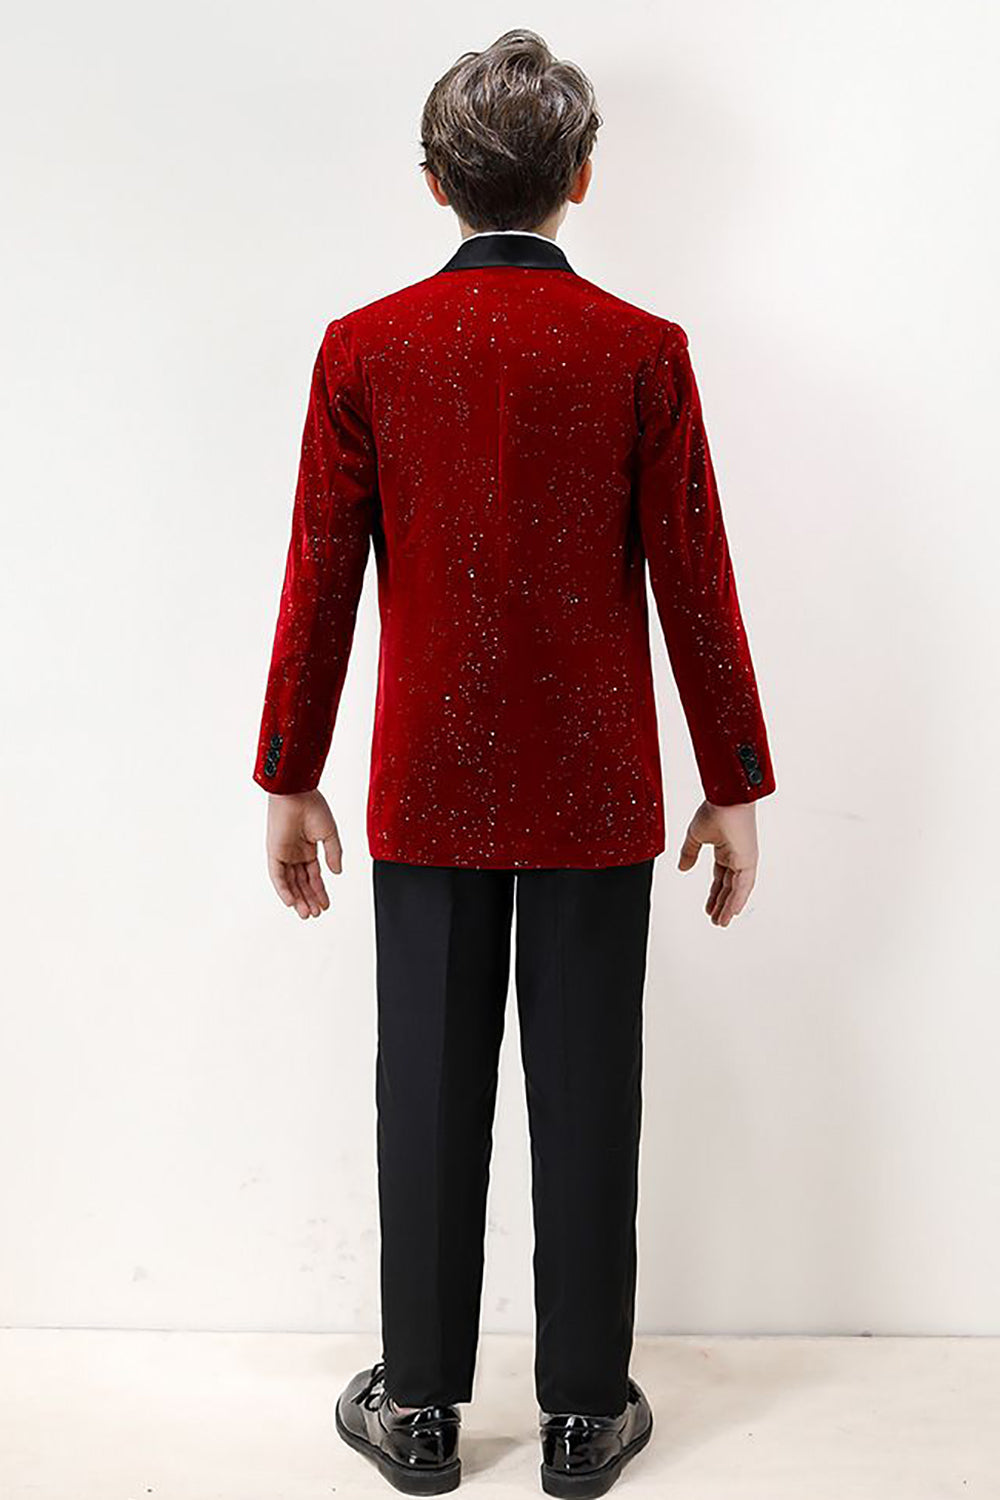 Sparkly Burgundy Boys' 3-Piece Formal Suit Set